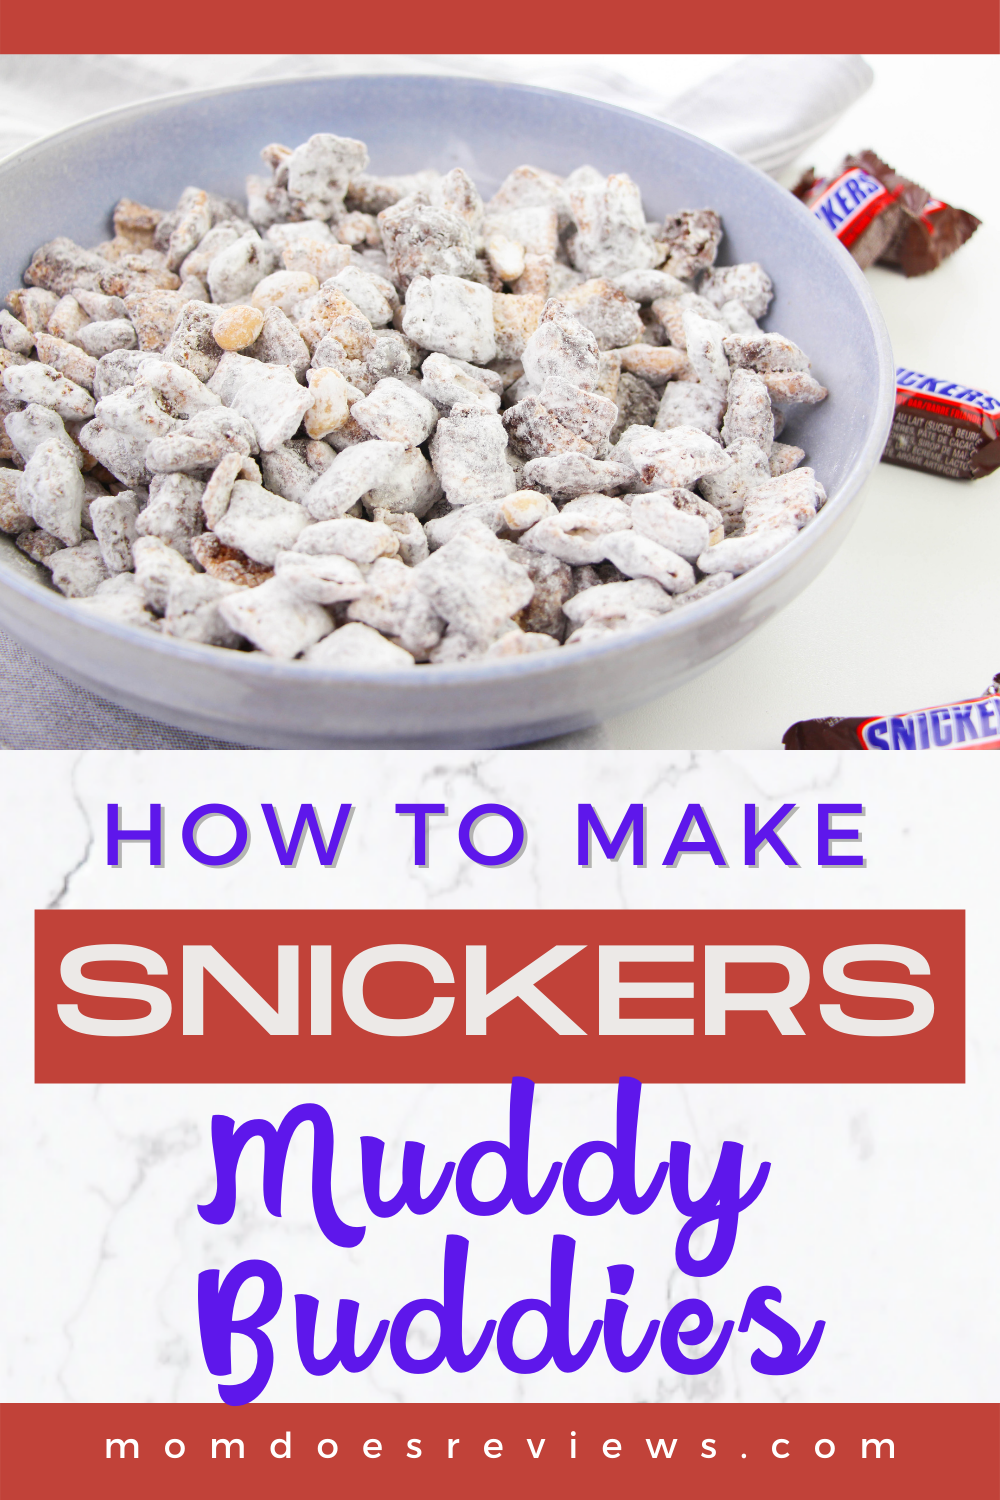 Snickers Muddy Buddies #sweets #foodie #muddybuddies